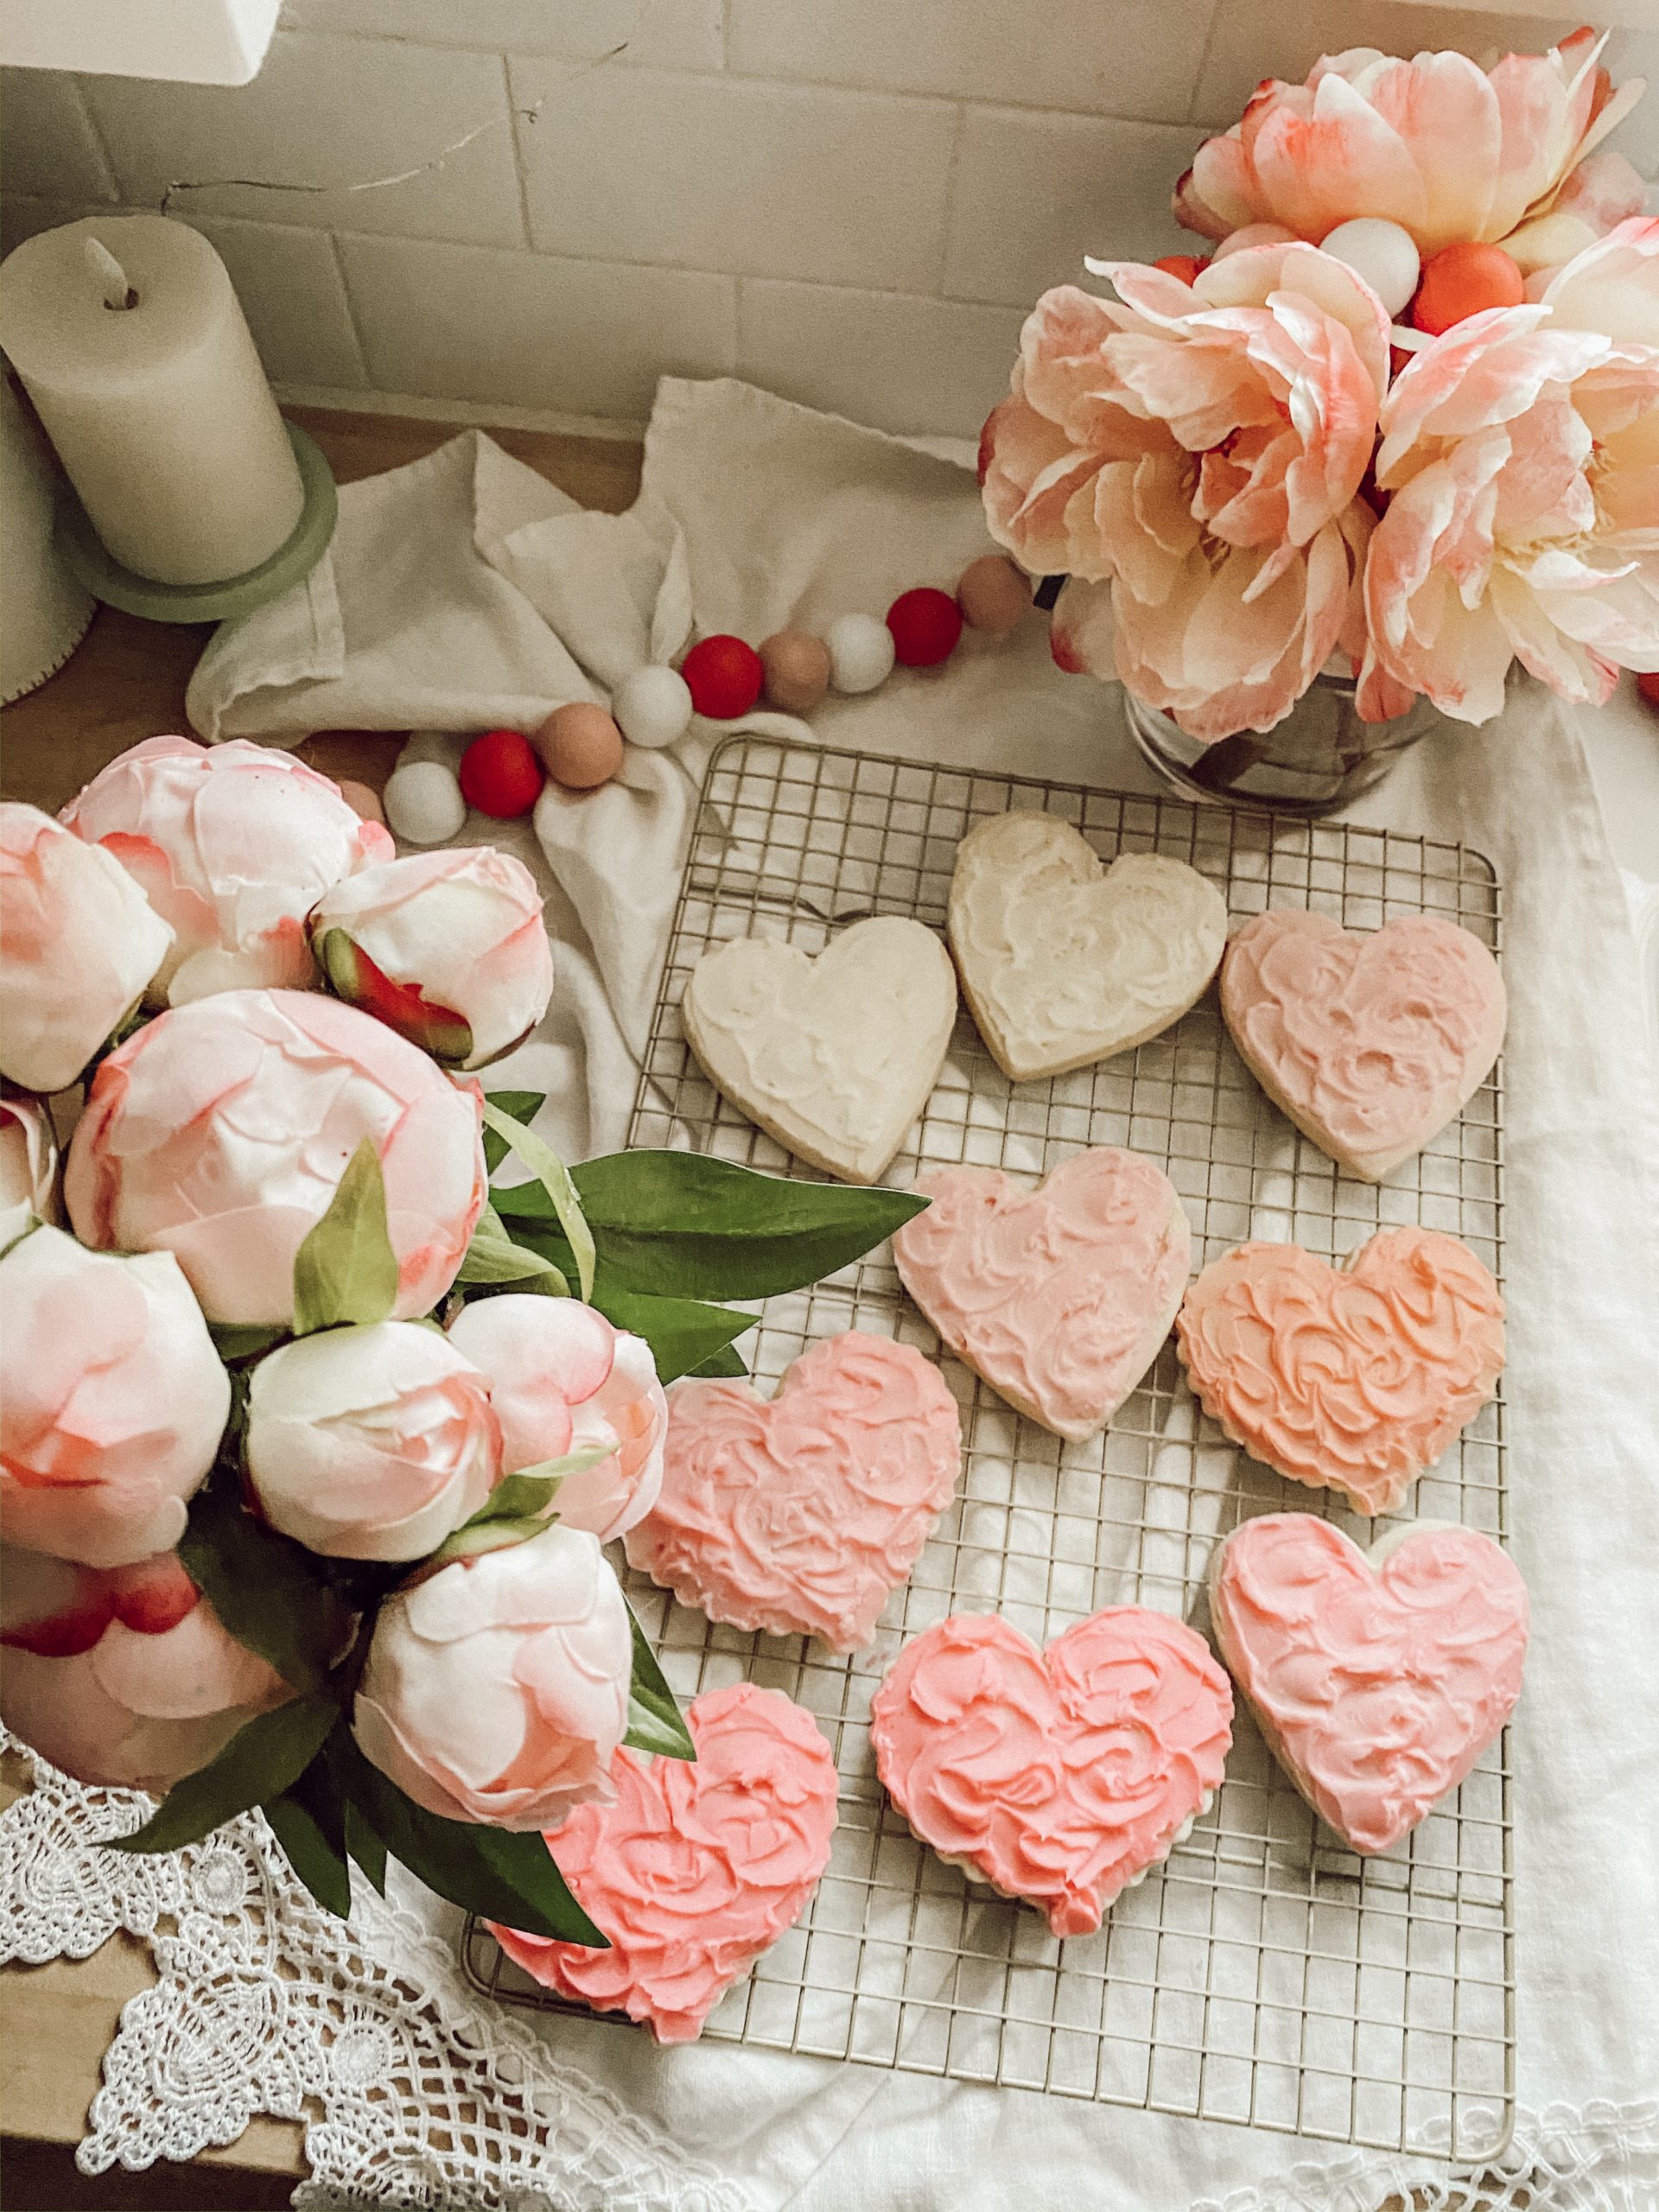 Ombre Valentine's Day cookies